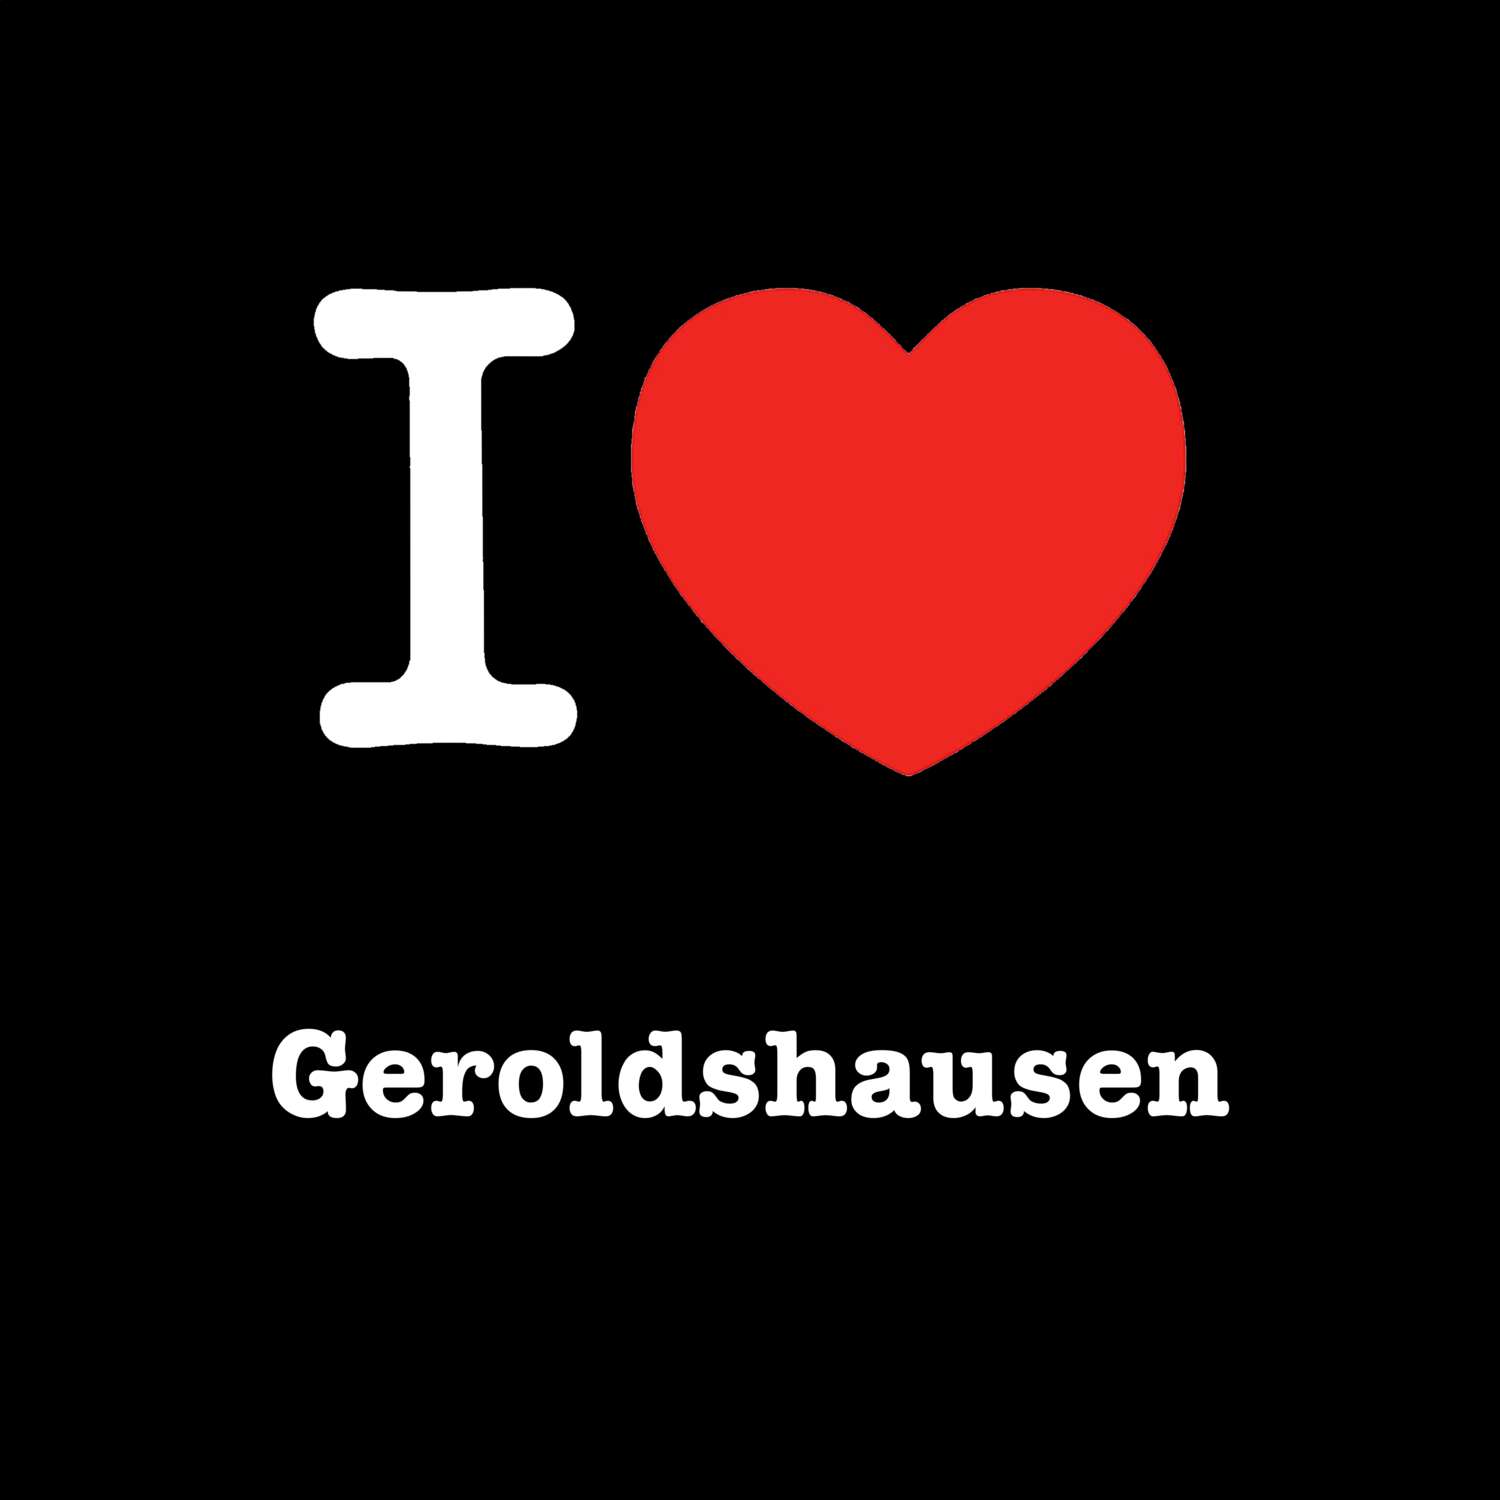 Geroldshausen T-Shirt »I love«